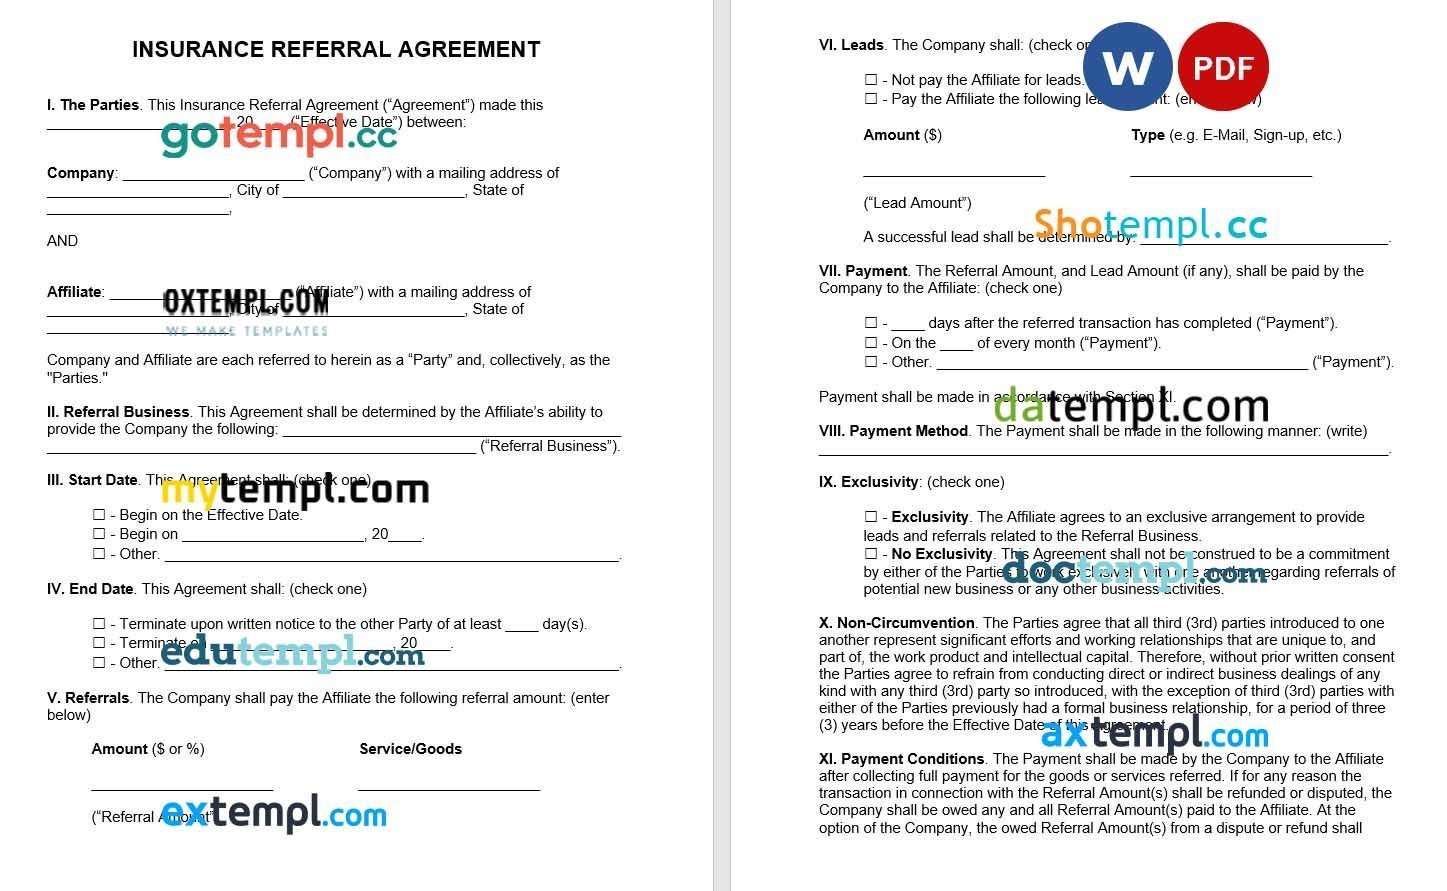 Kansas Standard Residential Lease Agreement Form word example, fully editable